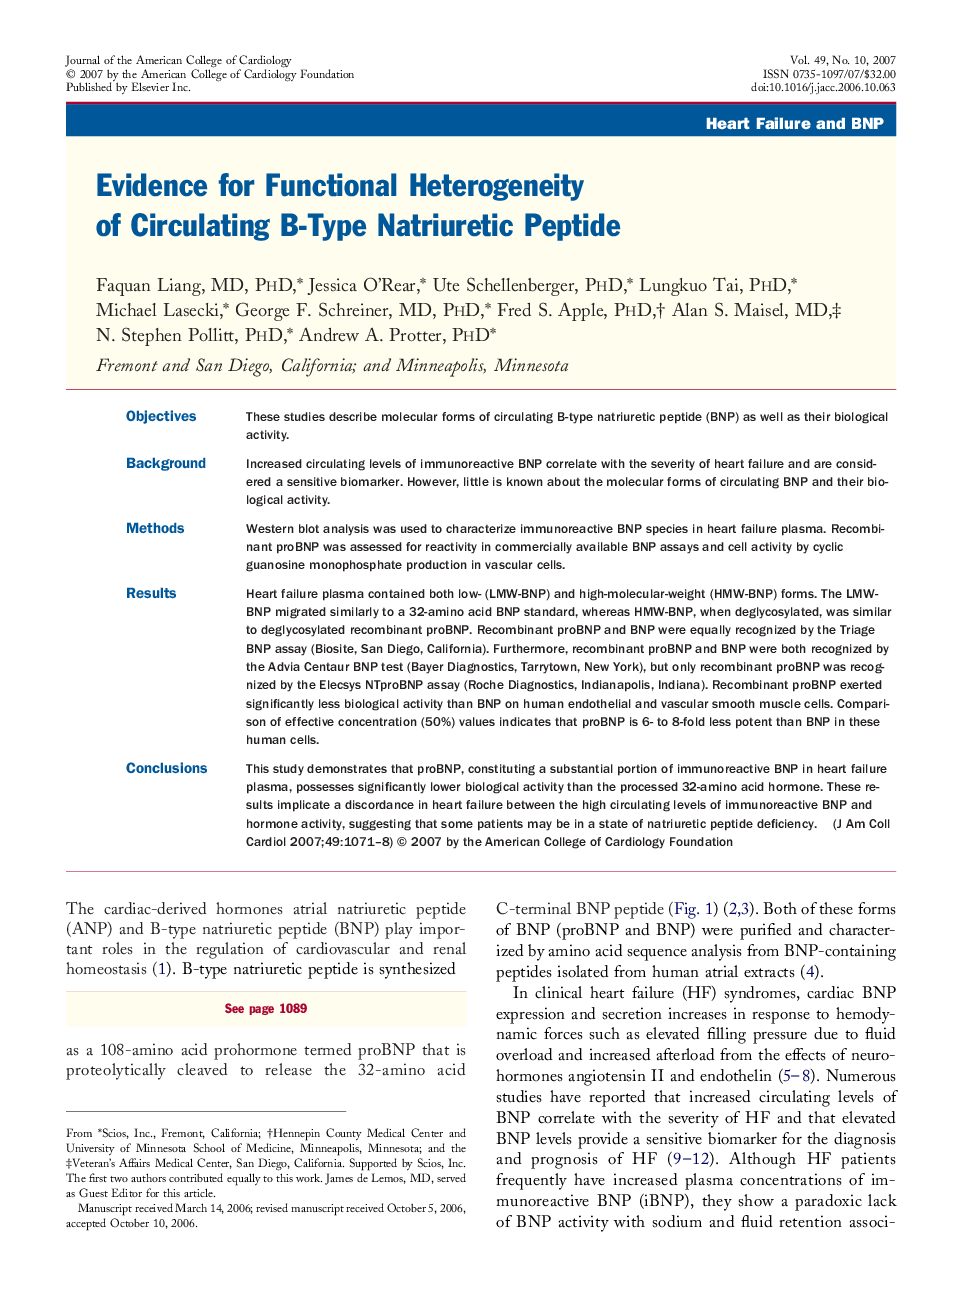 Evidence for Functional Heterogeneity of Circulating B-Type Natriuretic Peptide 